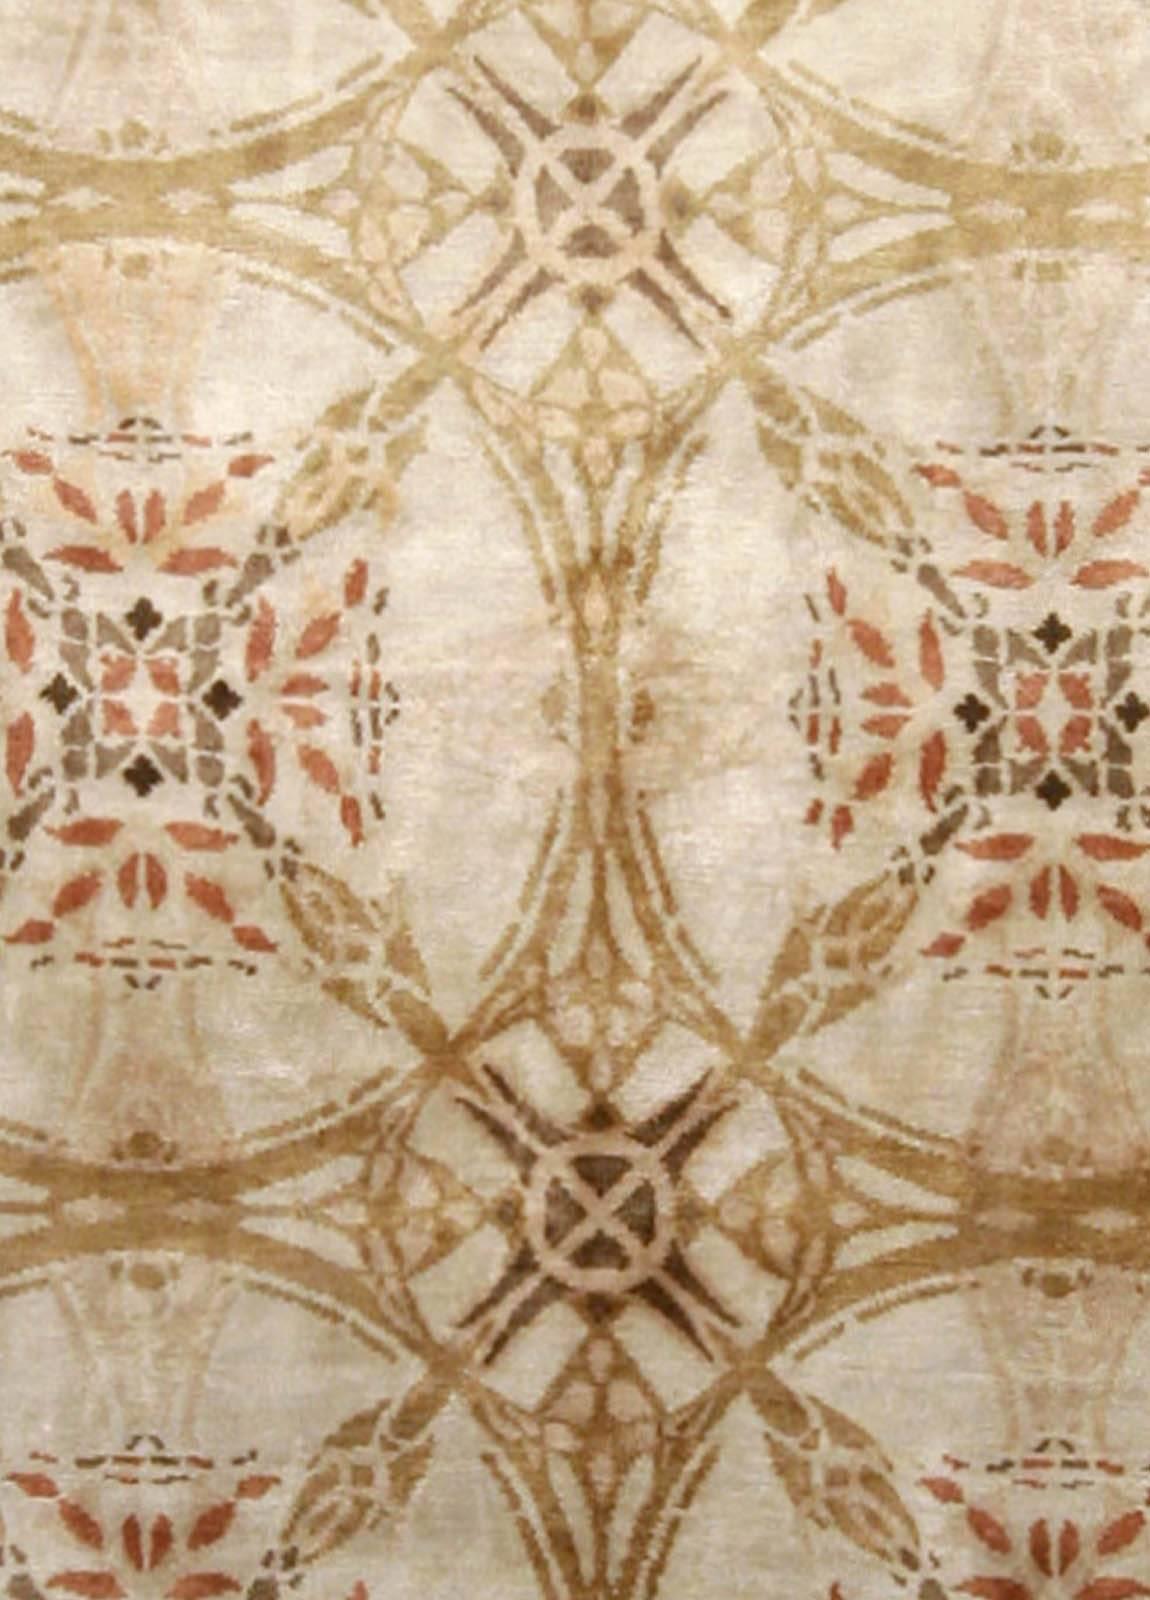 One-of-a-kind Modern Botanic handmade silk rug by Doris Leslie Blau
Size: 8'0